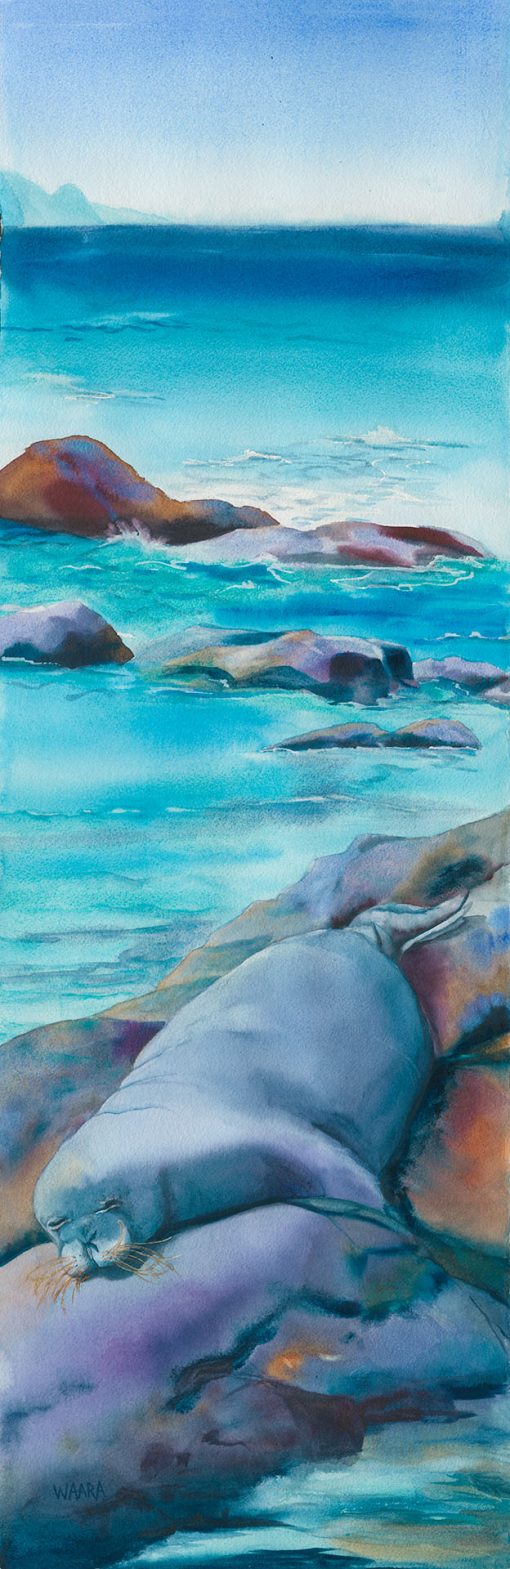 ‘Ilioholoikauaua watercolor painting of monk seal